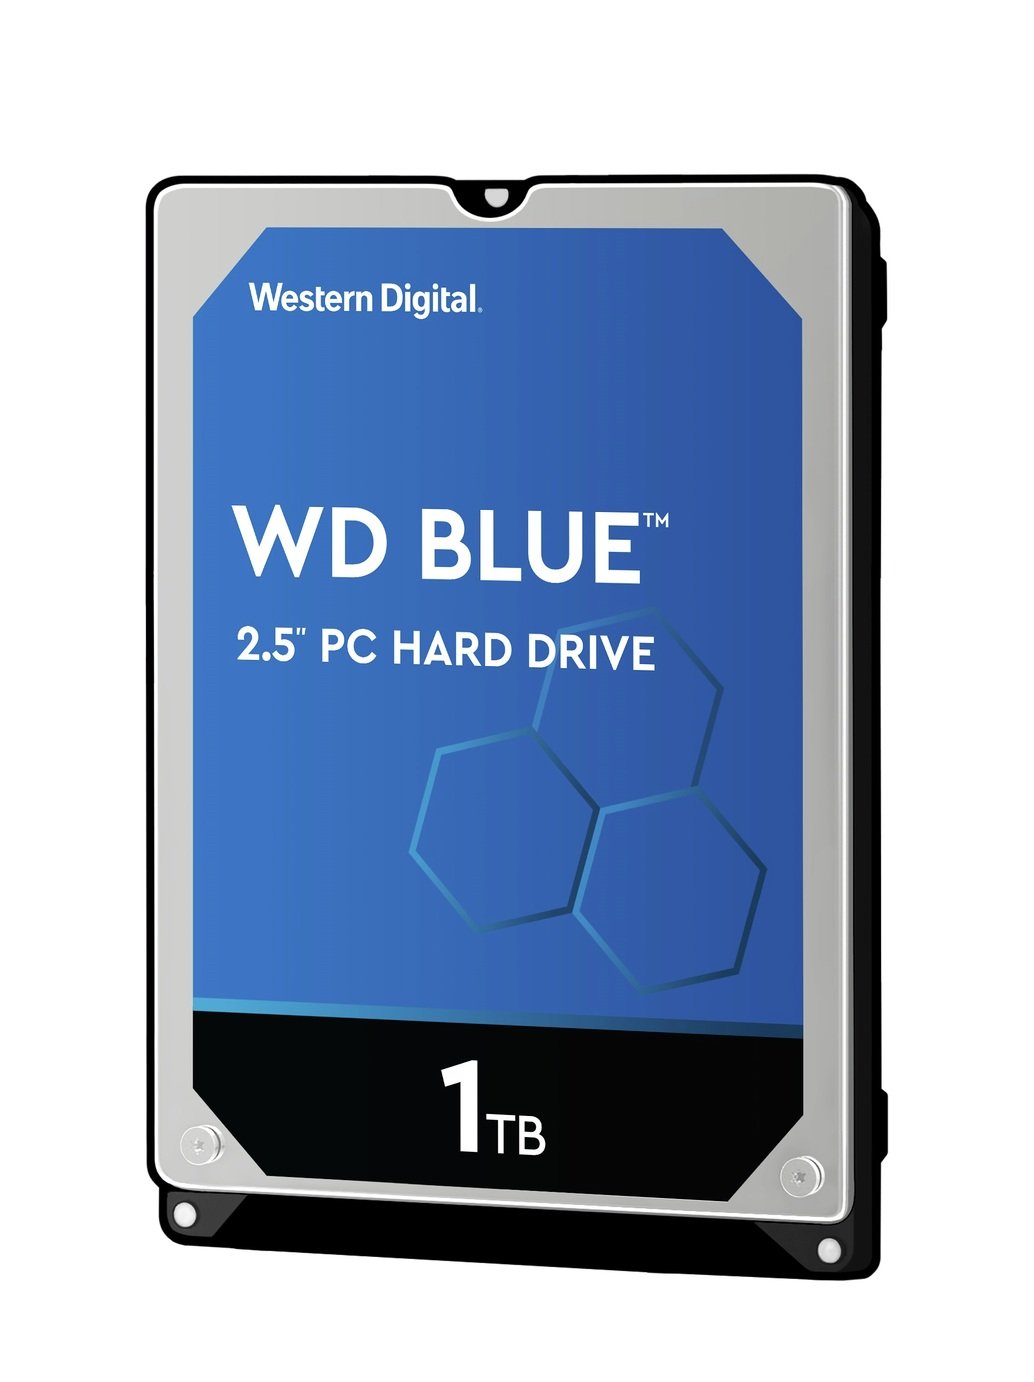 WD Blue 1TB Desktop Hard Drive Review